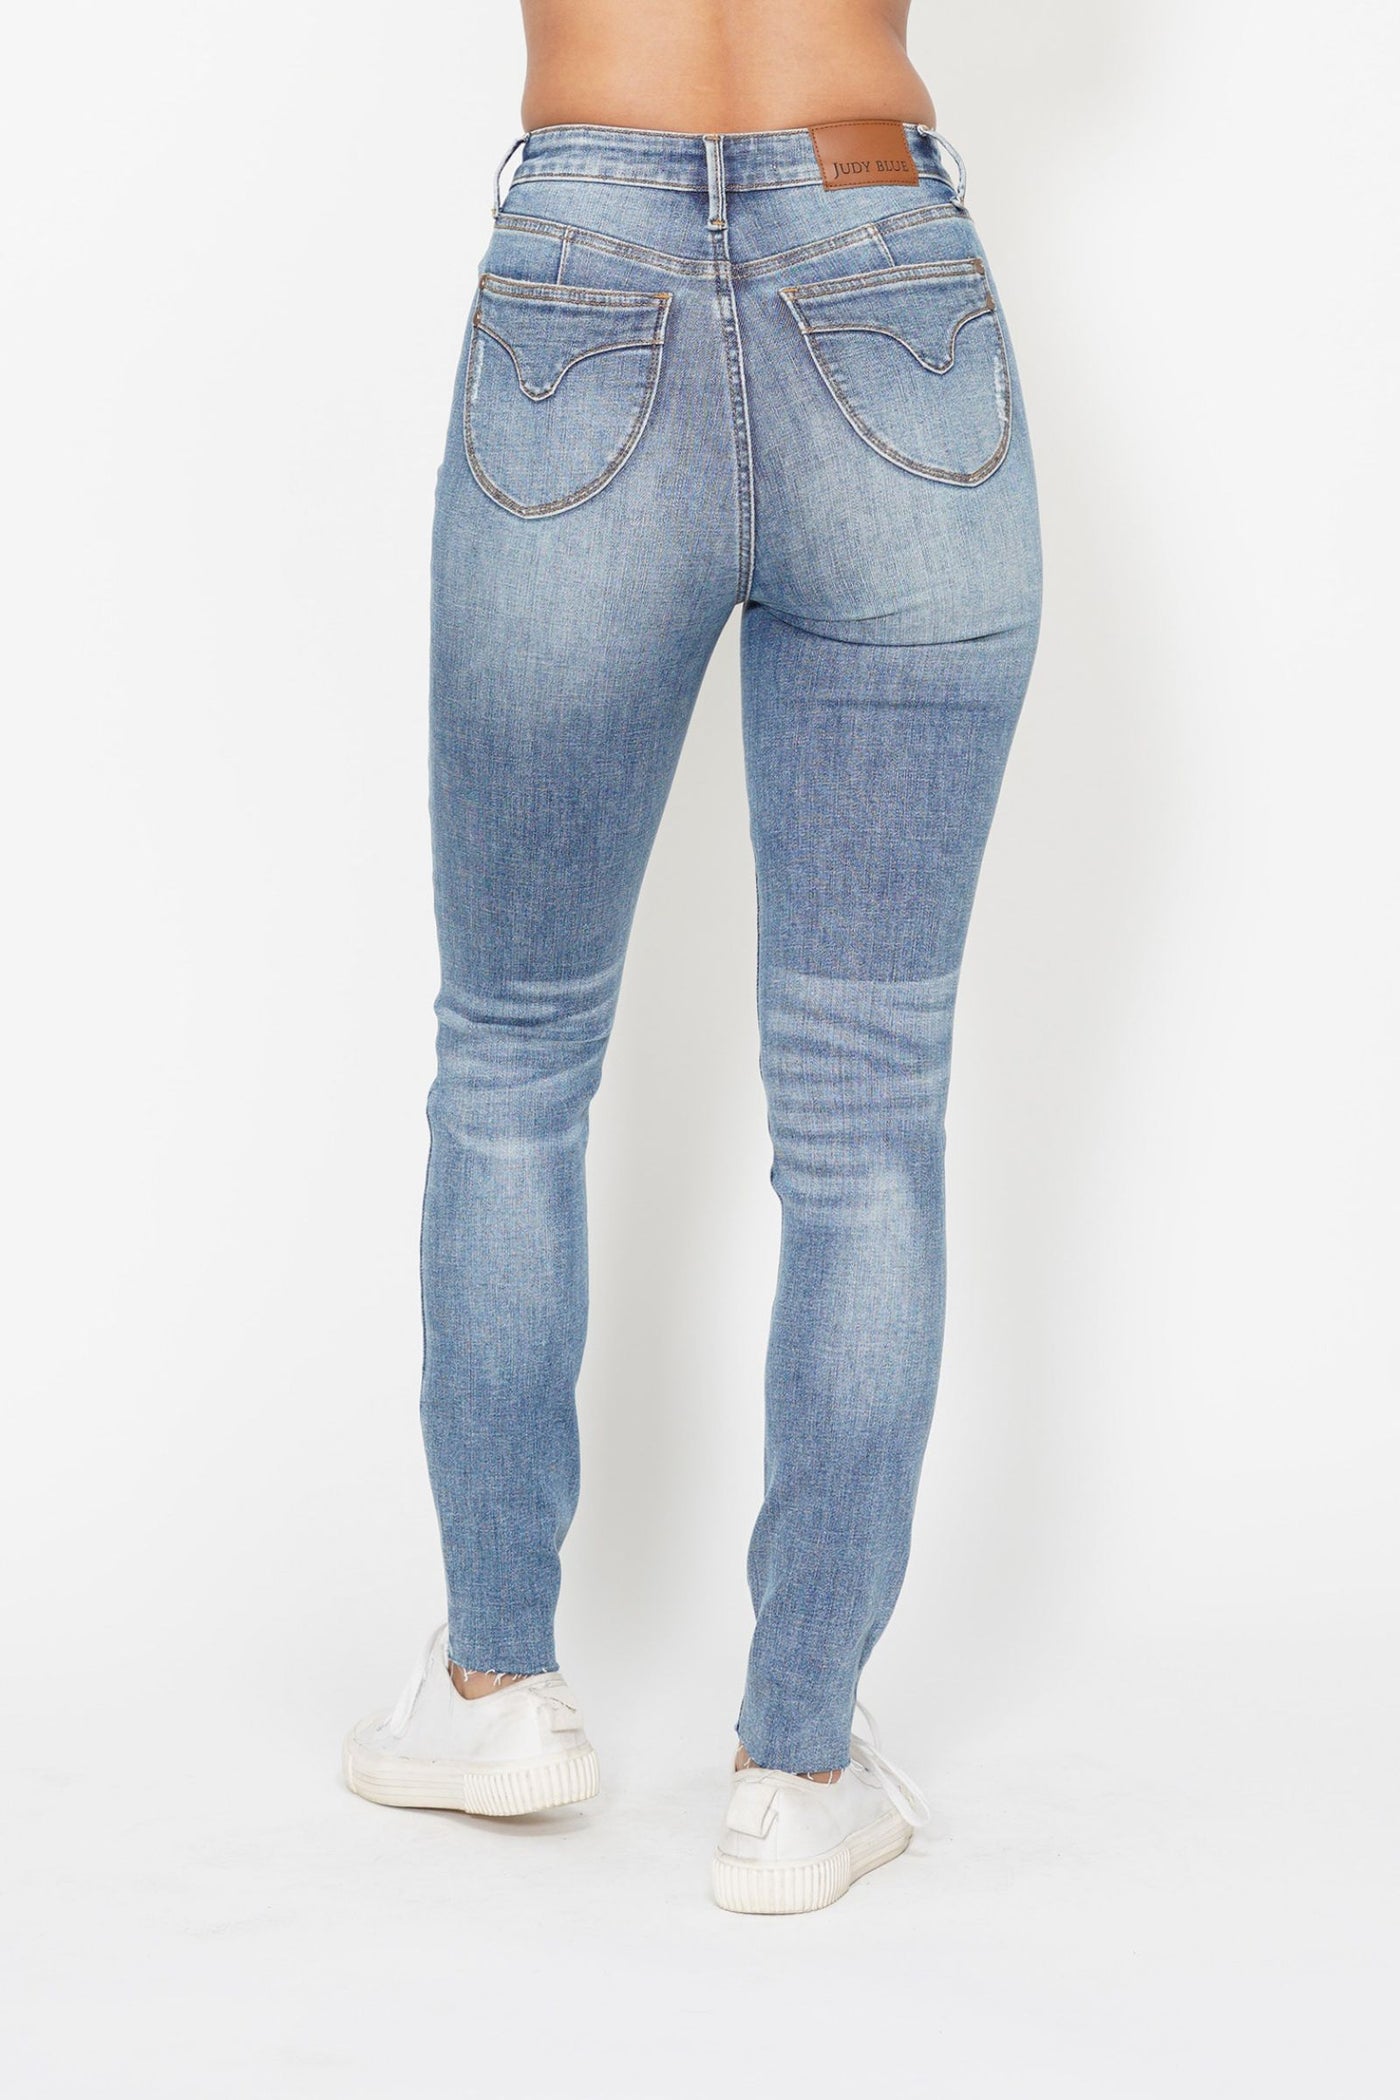 Judy Blue Jeans 88871